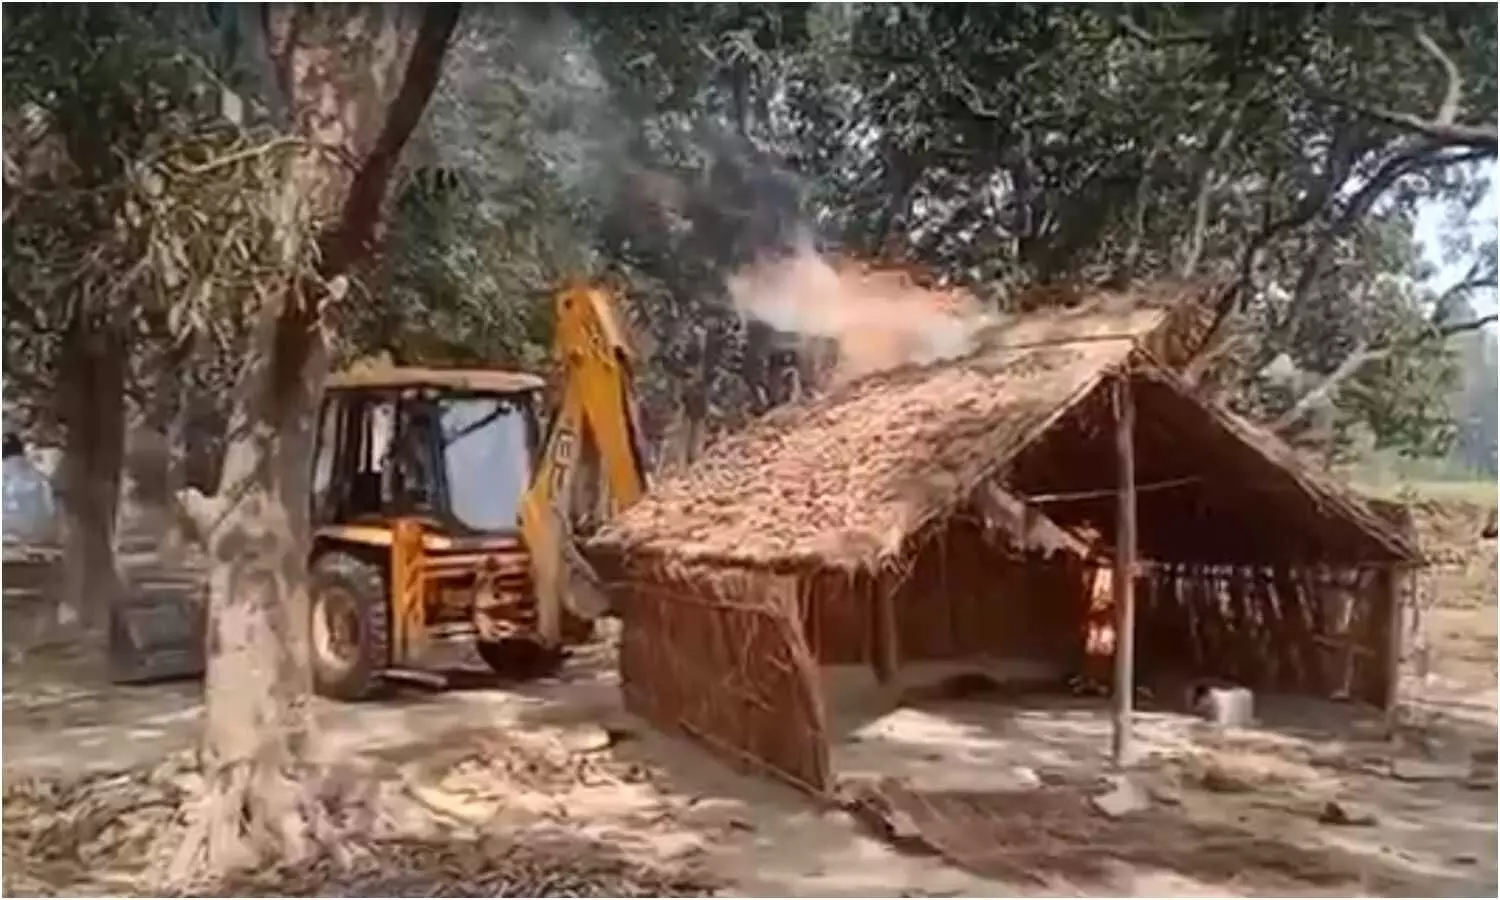 Sitapur hut caught fire when the bulldozer reached